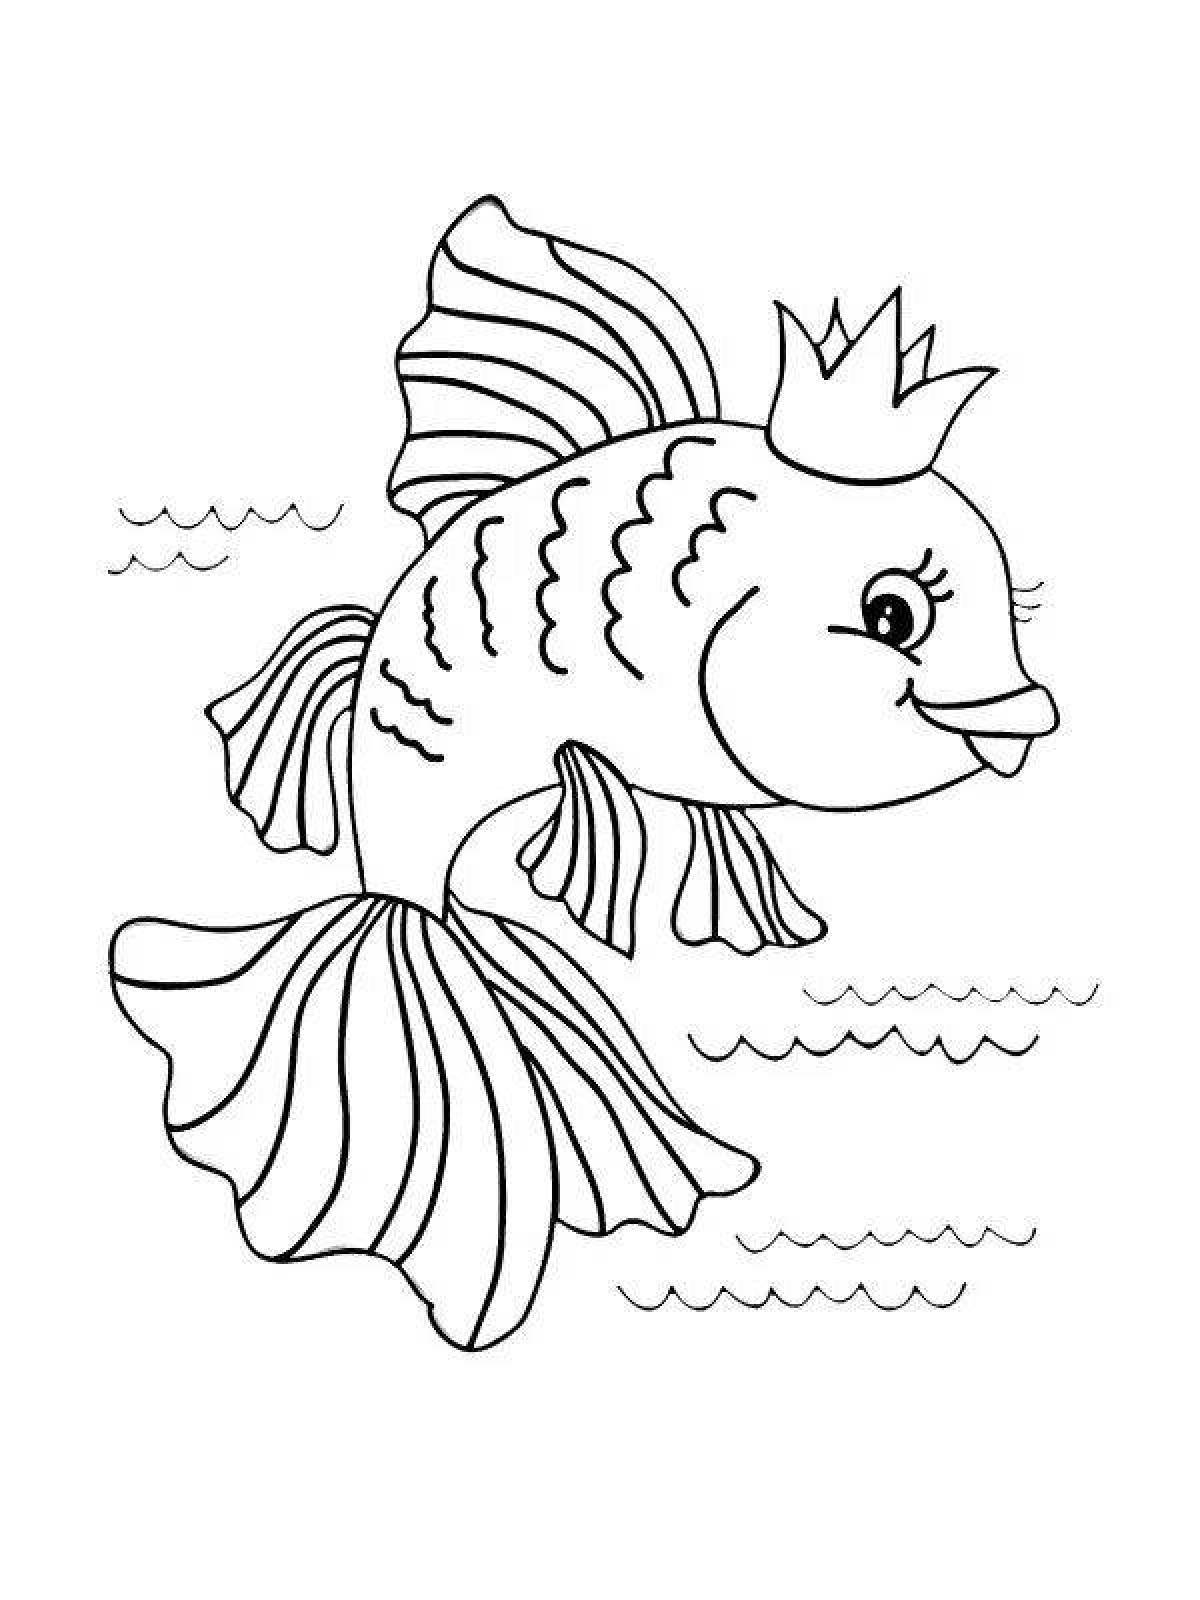 Glitter drawing of a goldfish